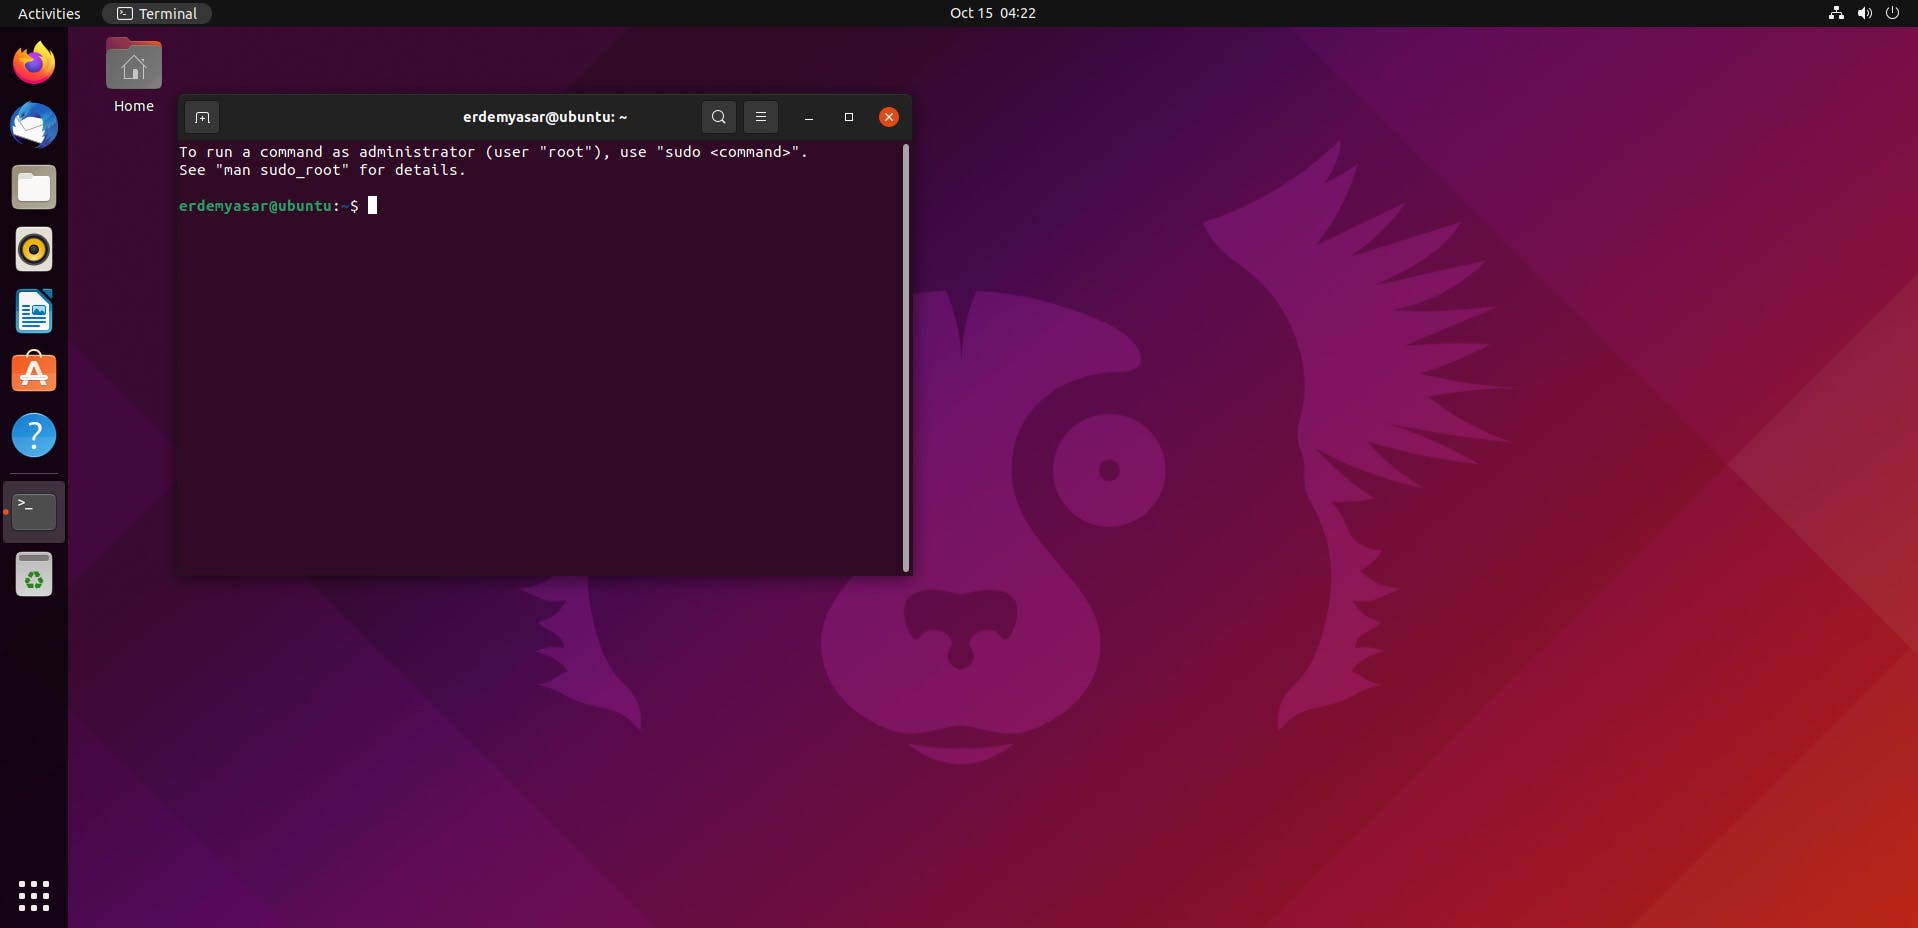 Ubuntu-21.10-Impish-Indri-is-ready-to-download-4.jpg